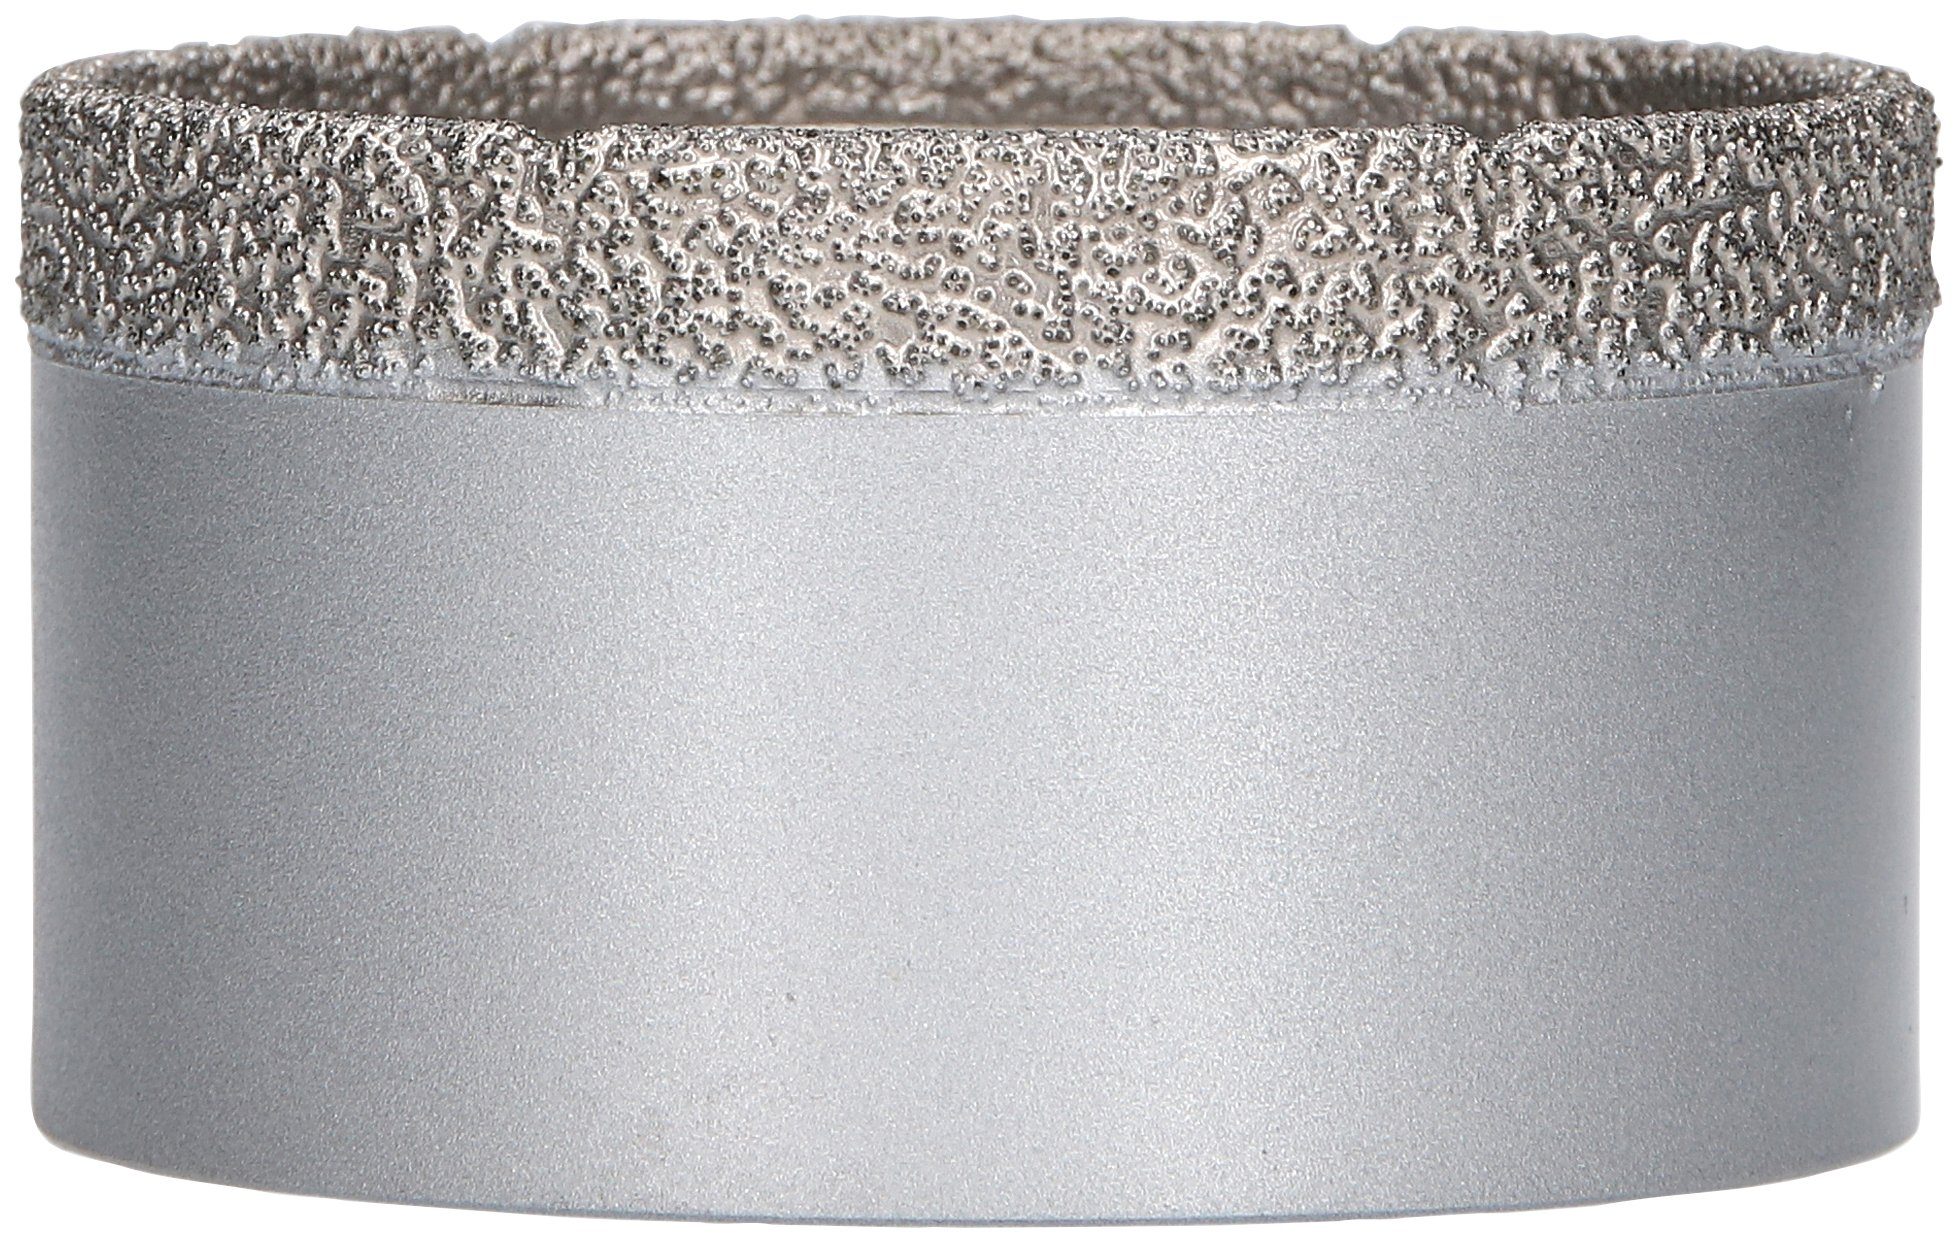 Bosch Speed, 35 75 mm X-LOCK x Professional mm, Ø for Dry Diamanttrockenbohrer Best 75 Ceramic